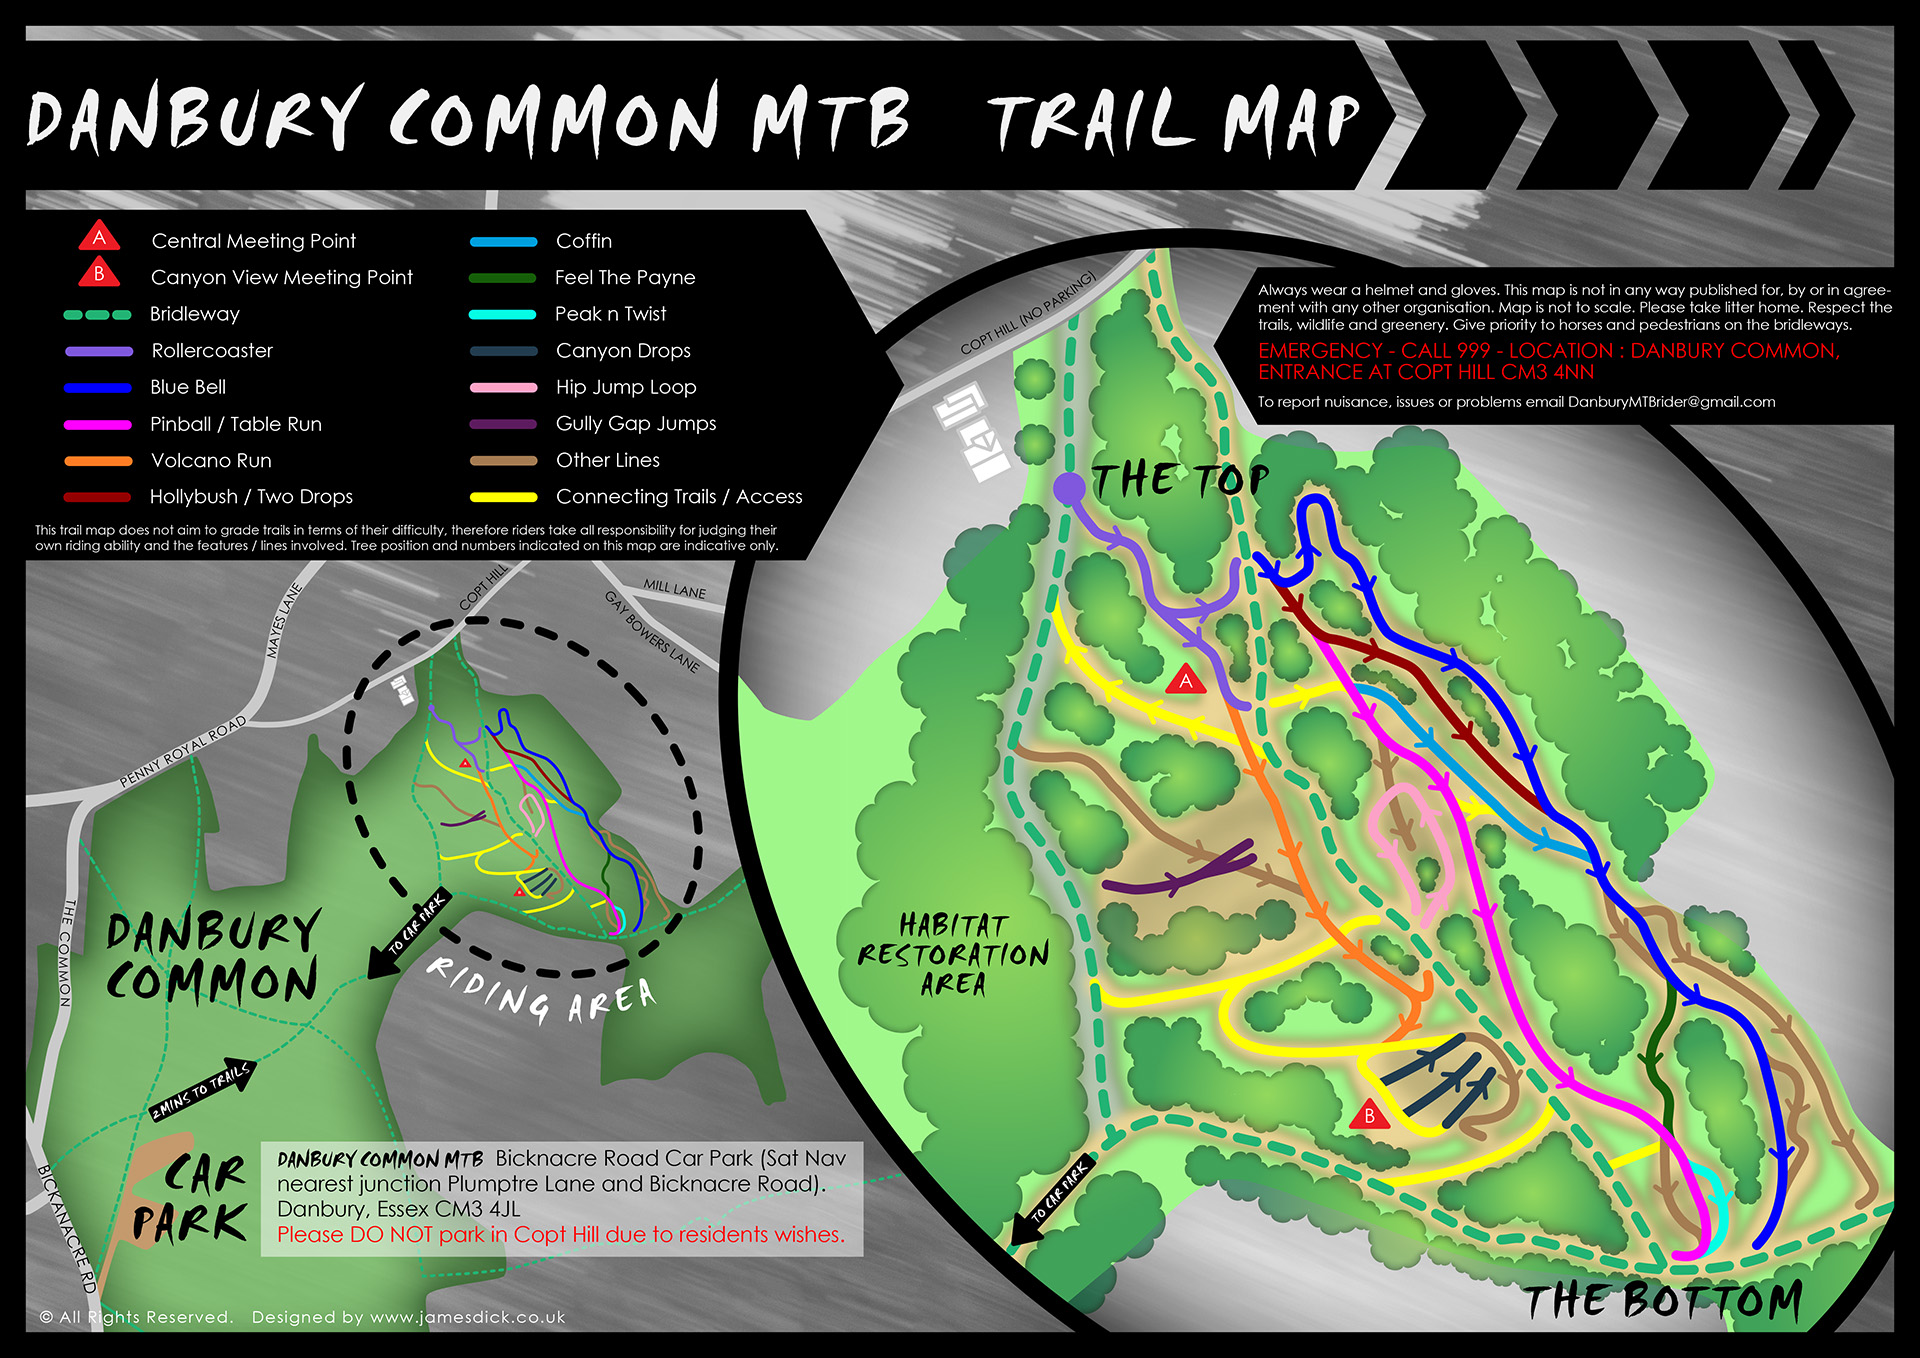 Danbury Common MTB trail map 007 highest